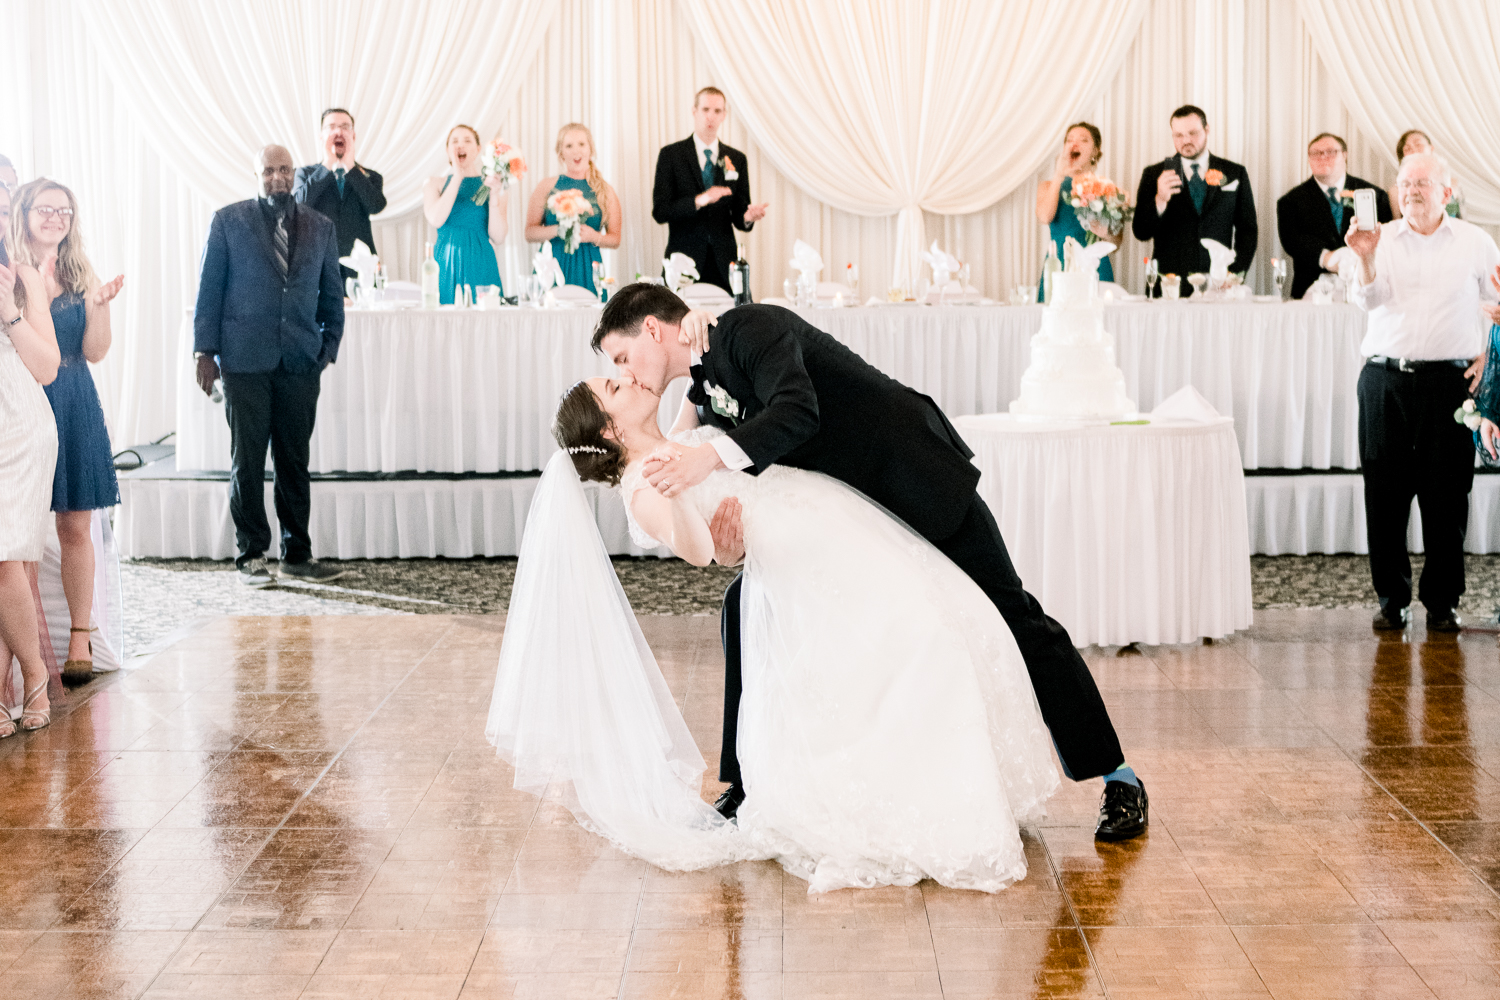 Groom dips his bride on dance floor and kiss